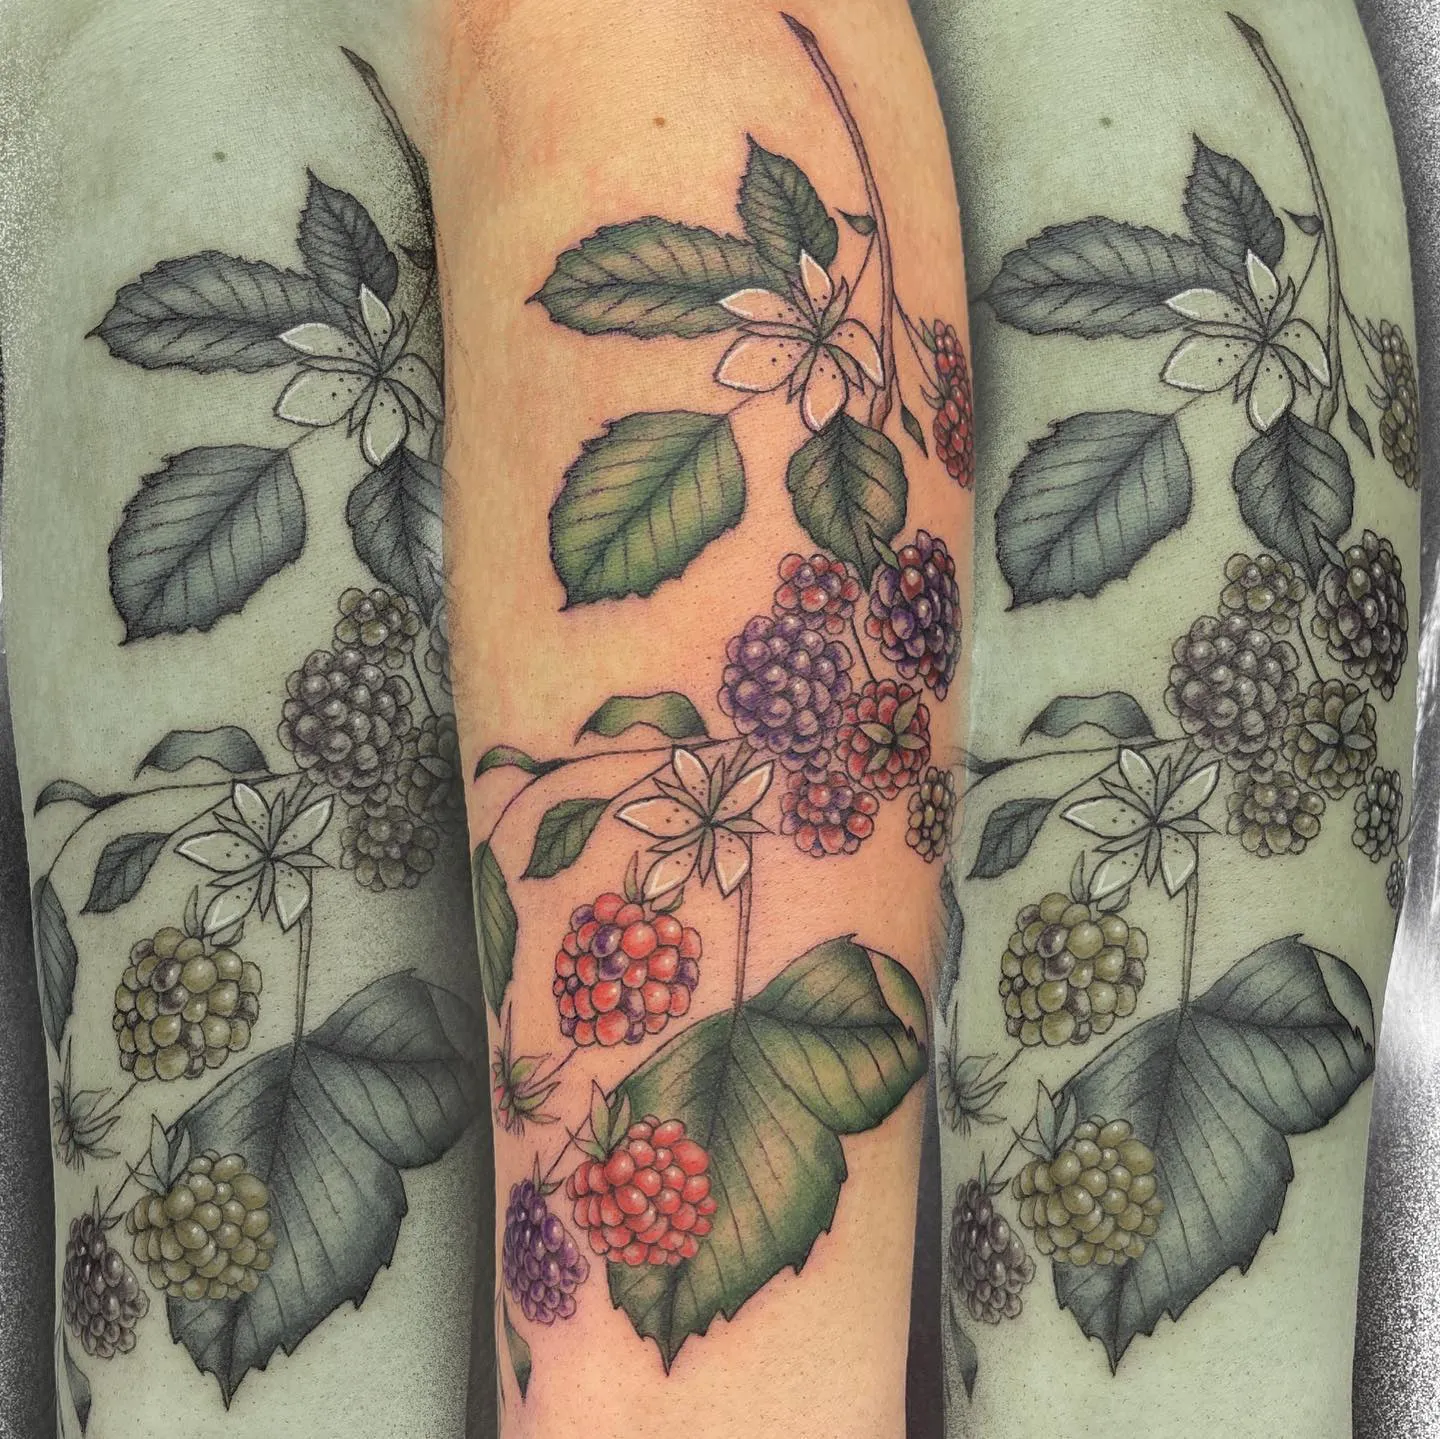 Colorful arm tattoo of ripe blackberries